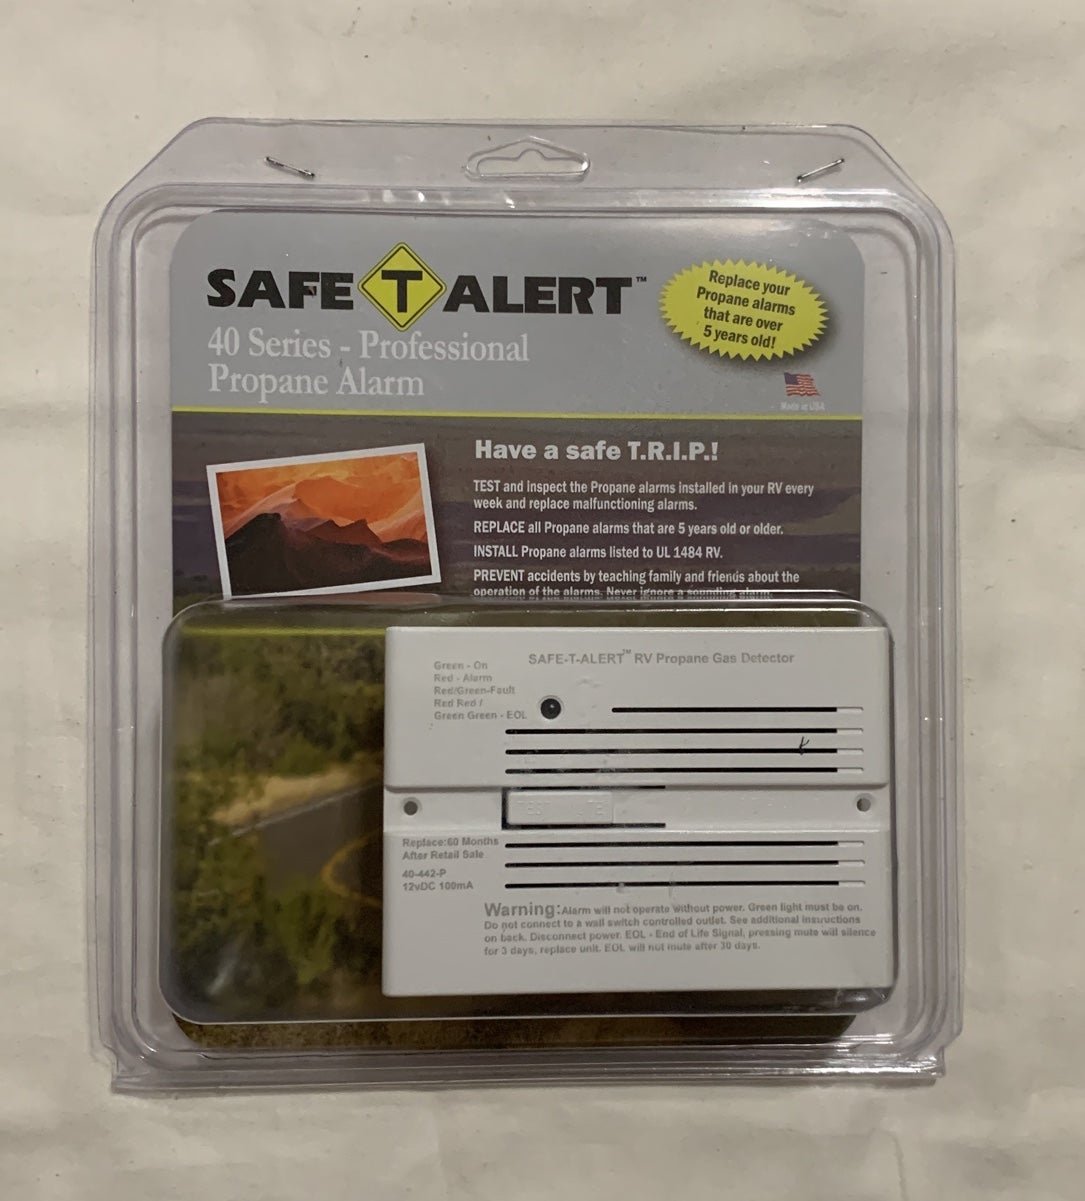 Safe T Alert 40 series Professional Propane Gas Alarm f5g6CxRHp